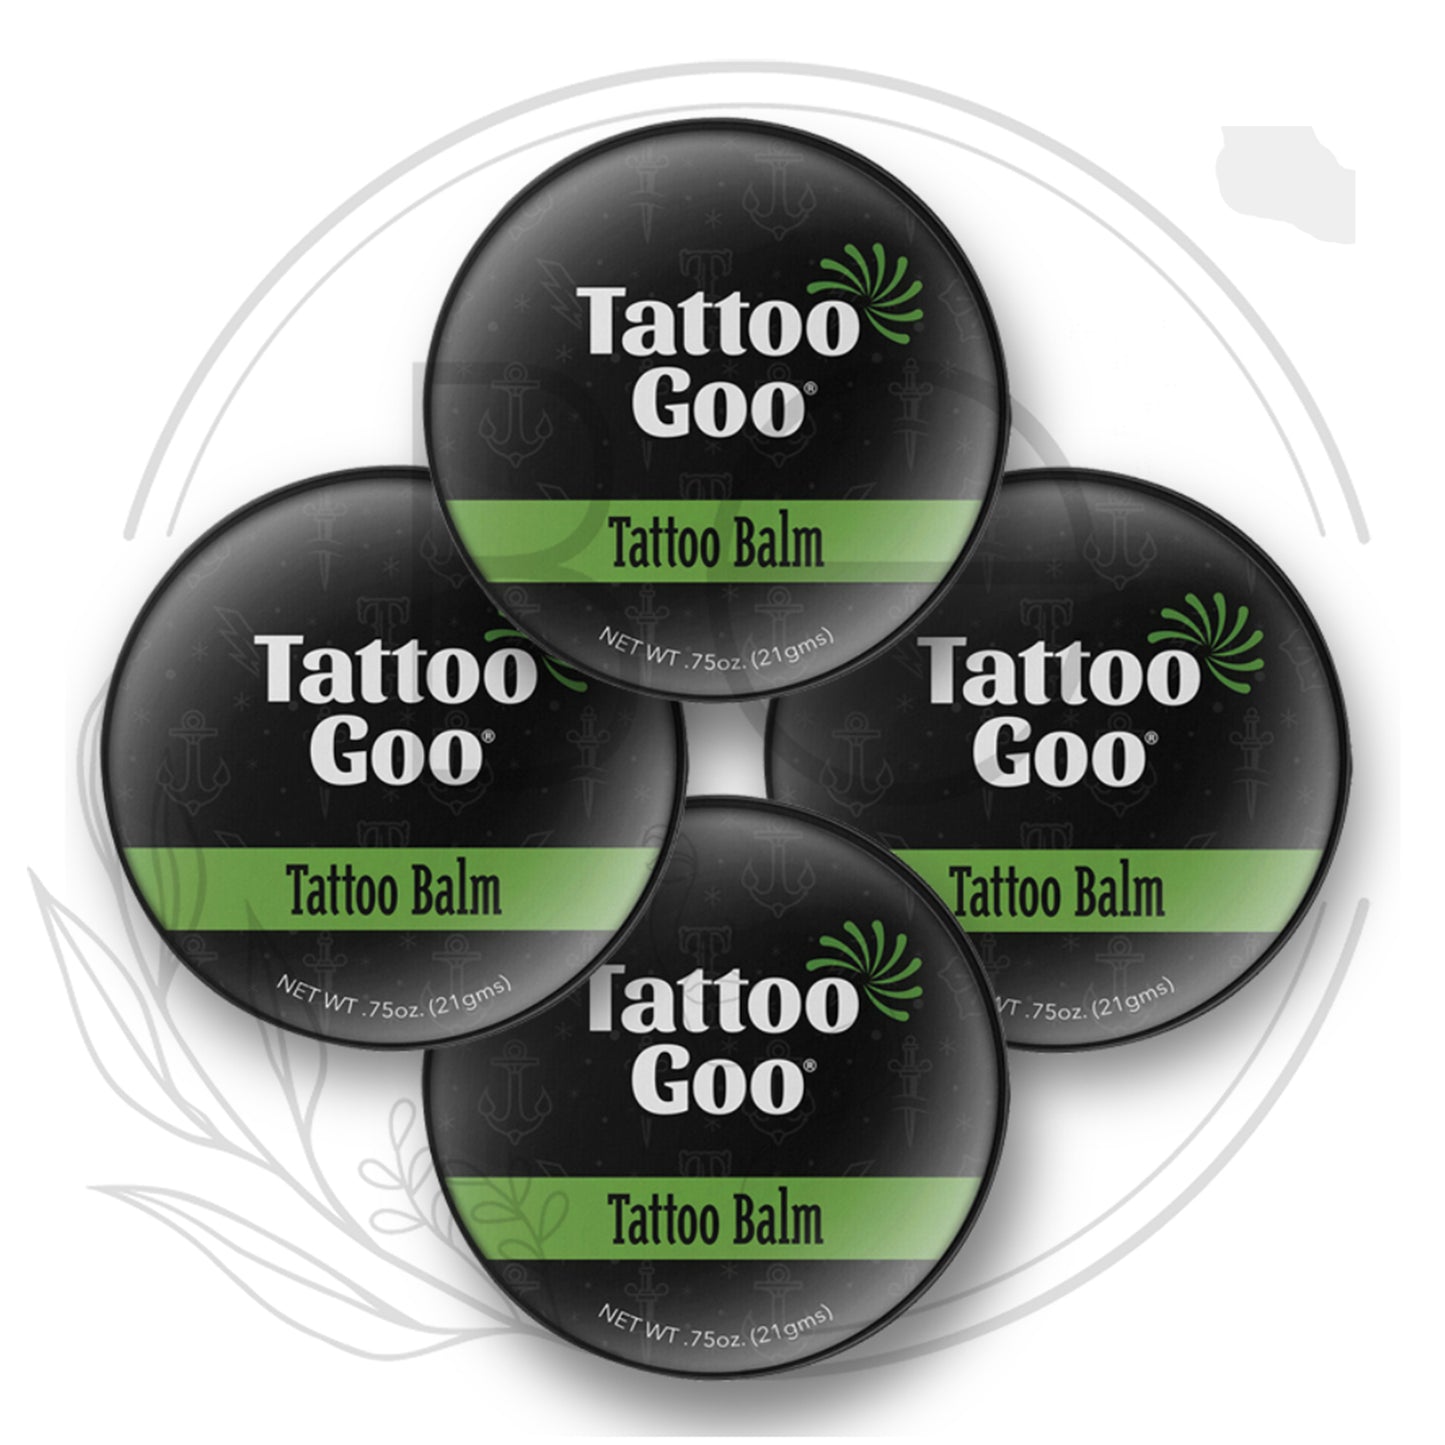 Tattoo Goo Original Healing Balm